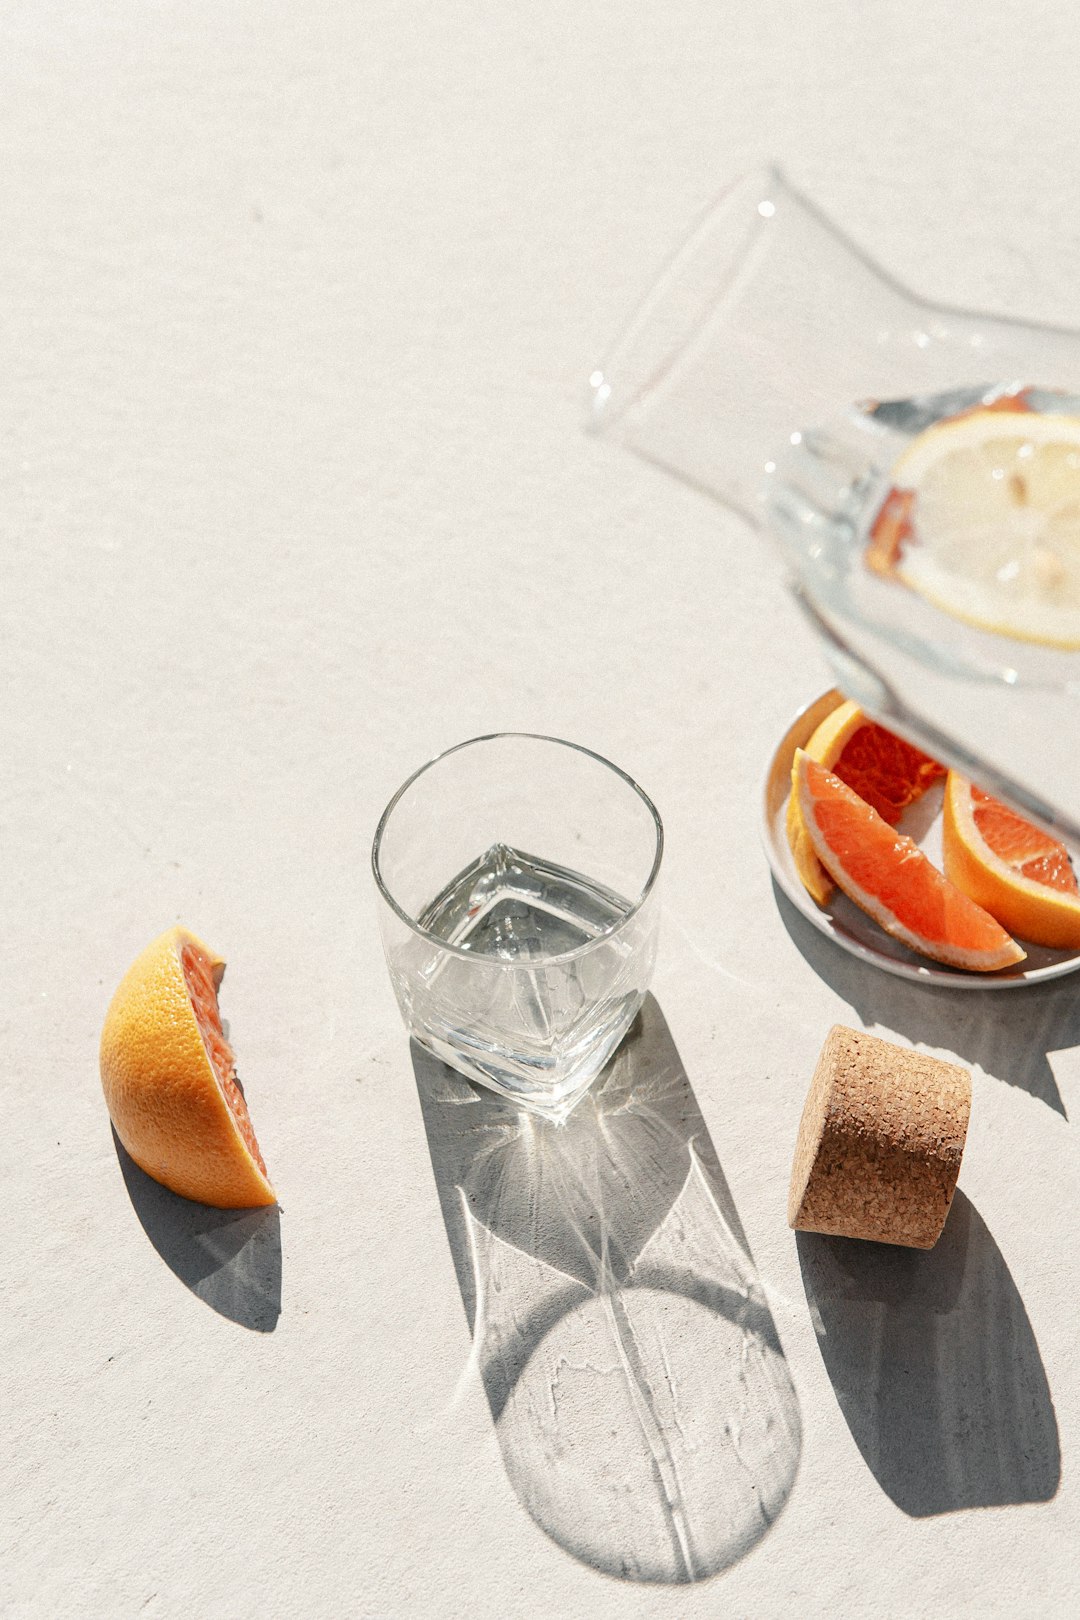 clear drinking glass beside sliced orange fruit